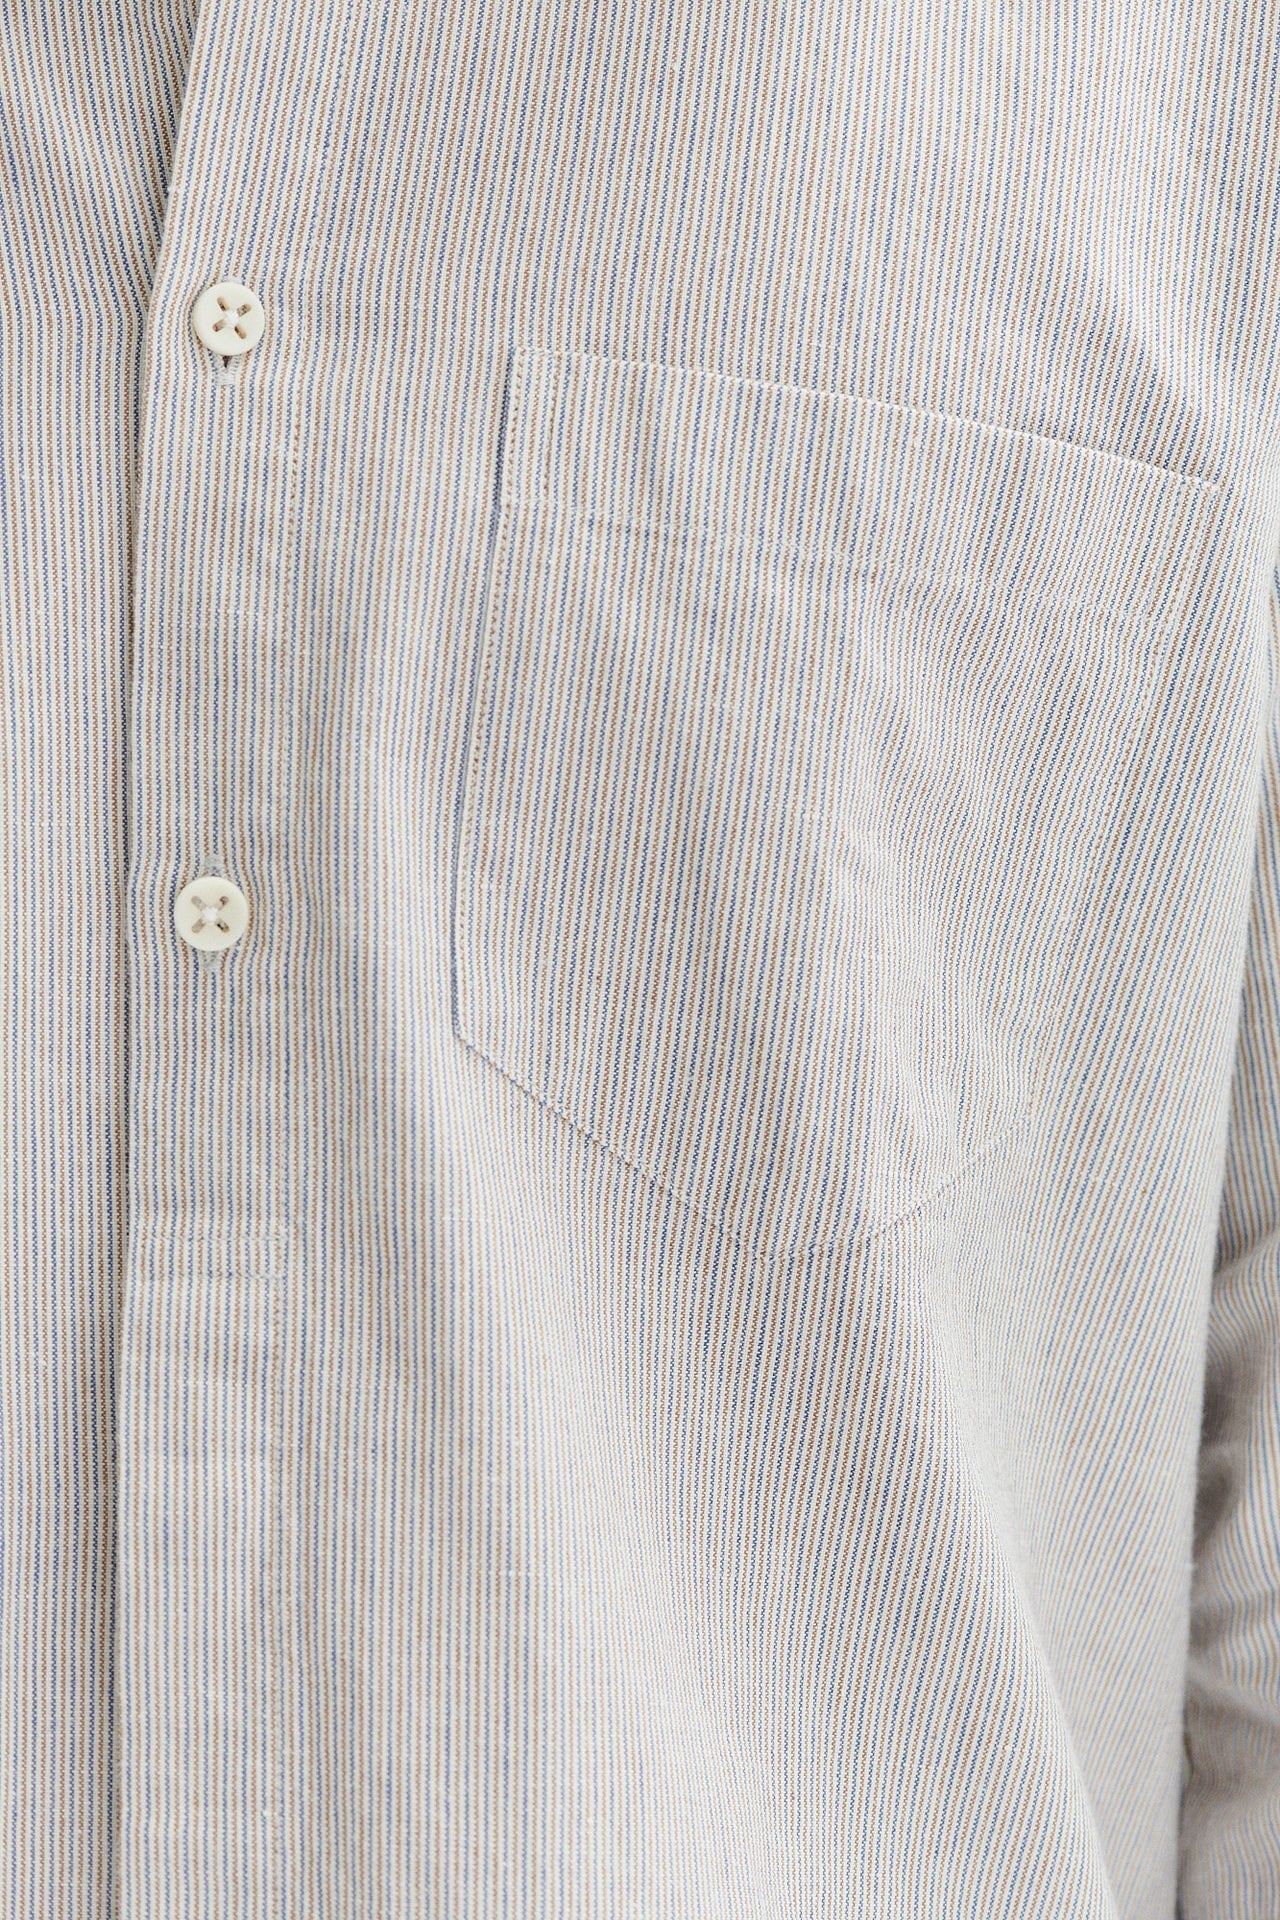 Zen Shirt in a Light Brown Cream and Blue Subtle Striped Portuguese Cotton